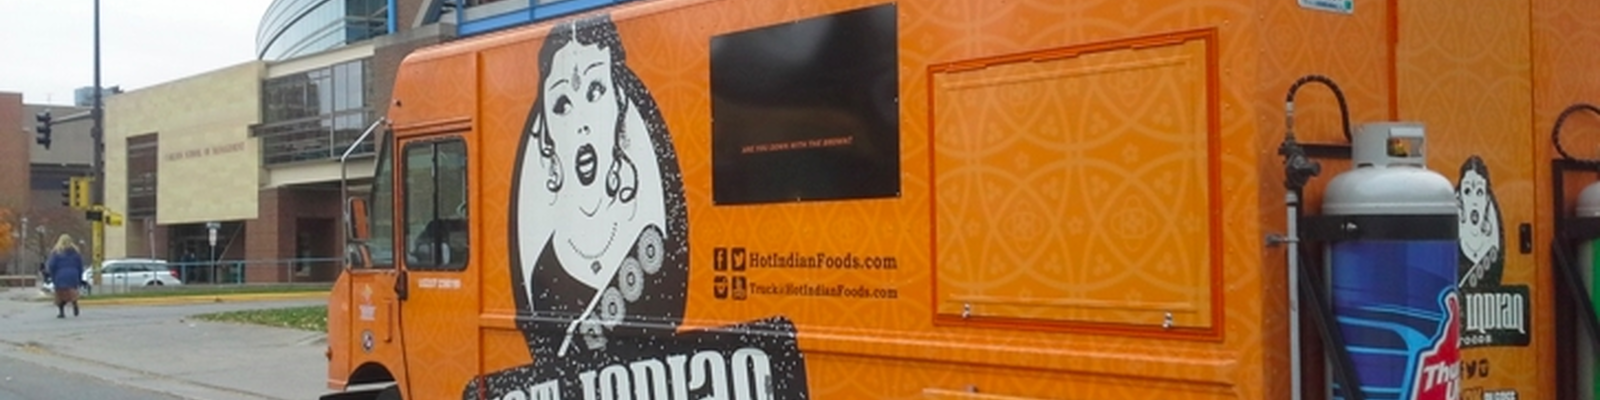 Hot Indian Foods Food Truck